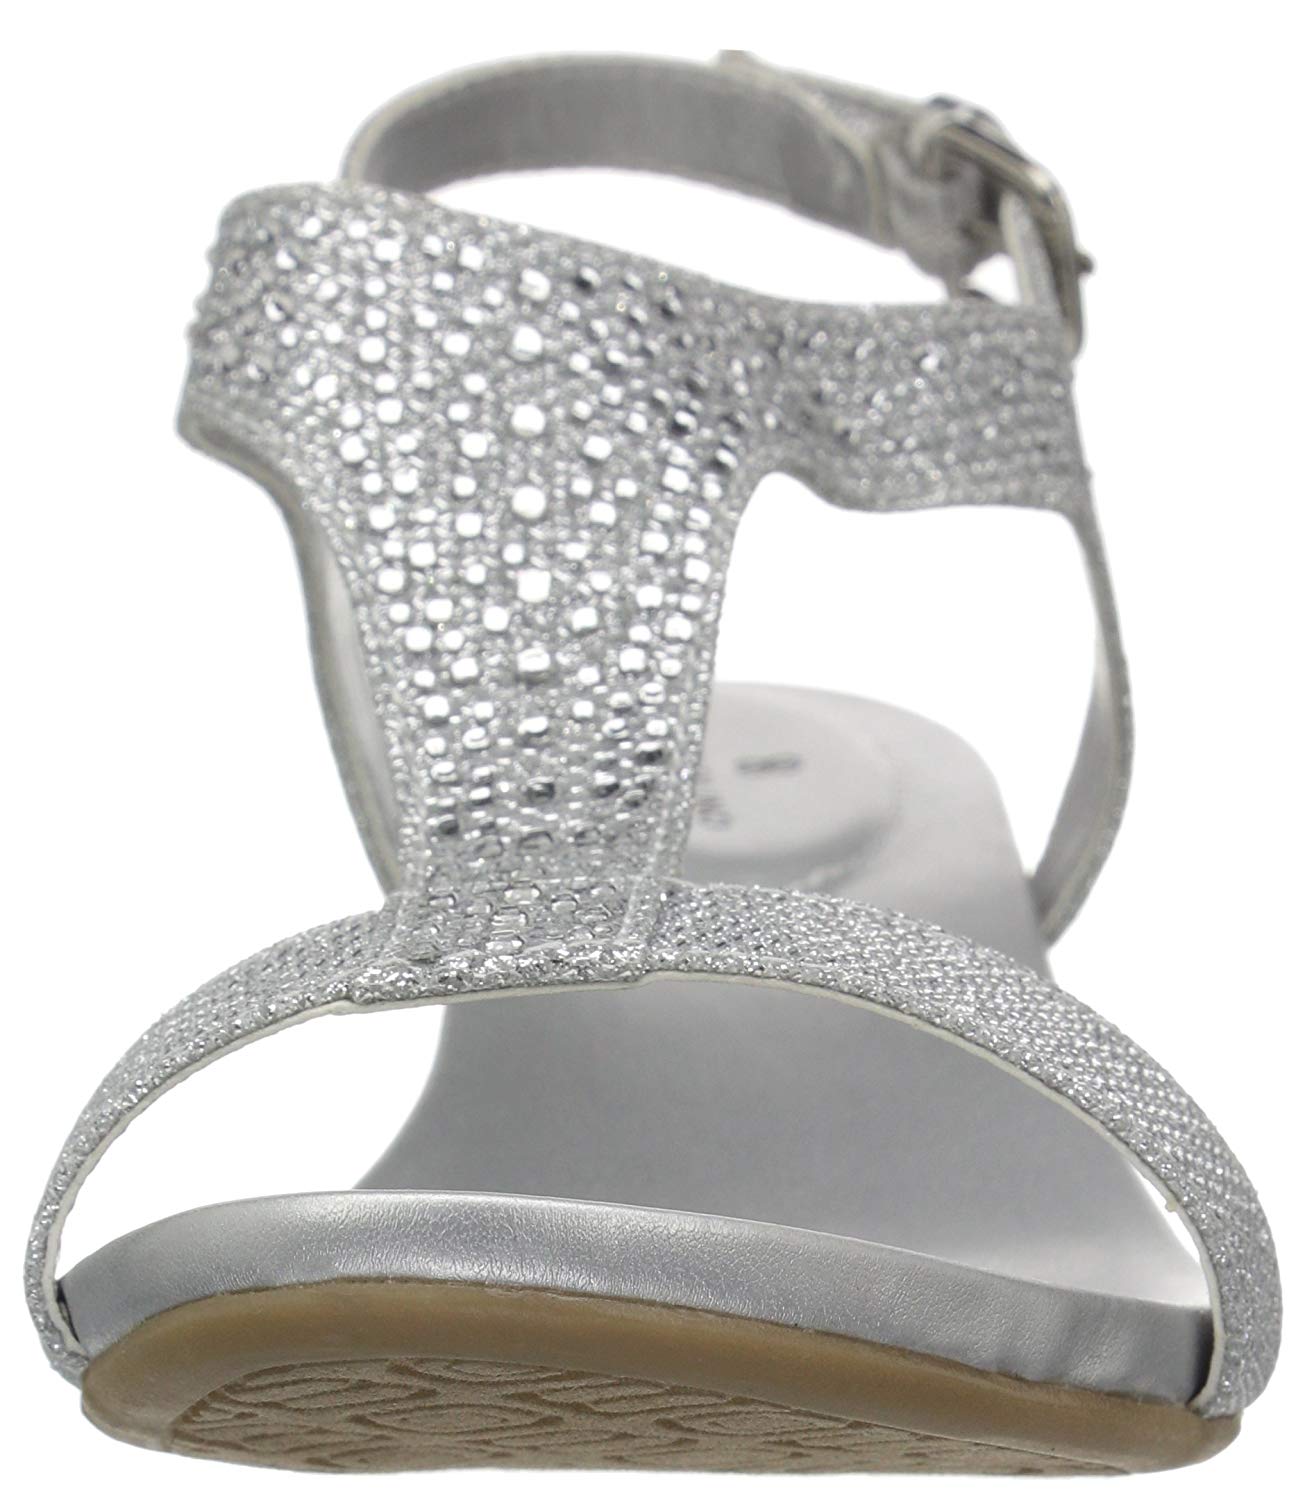 Bandolino Women's Gruglia Wedge Sandal, Silver, Size 5.5 ERdd | eBay